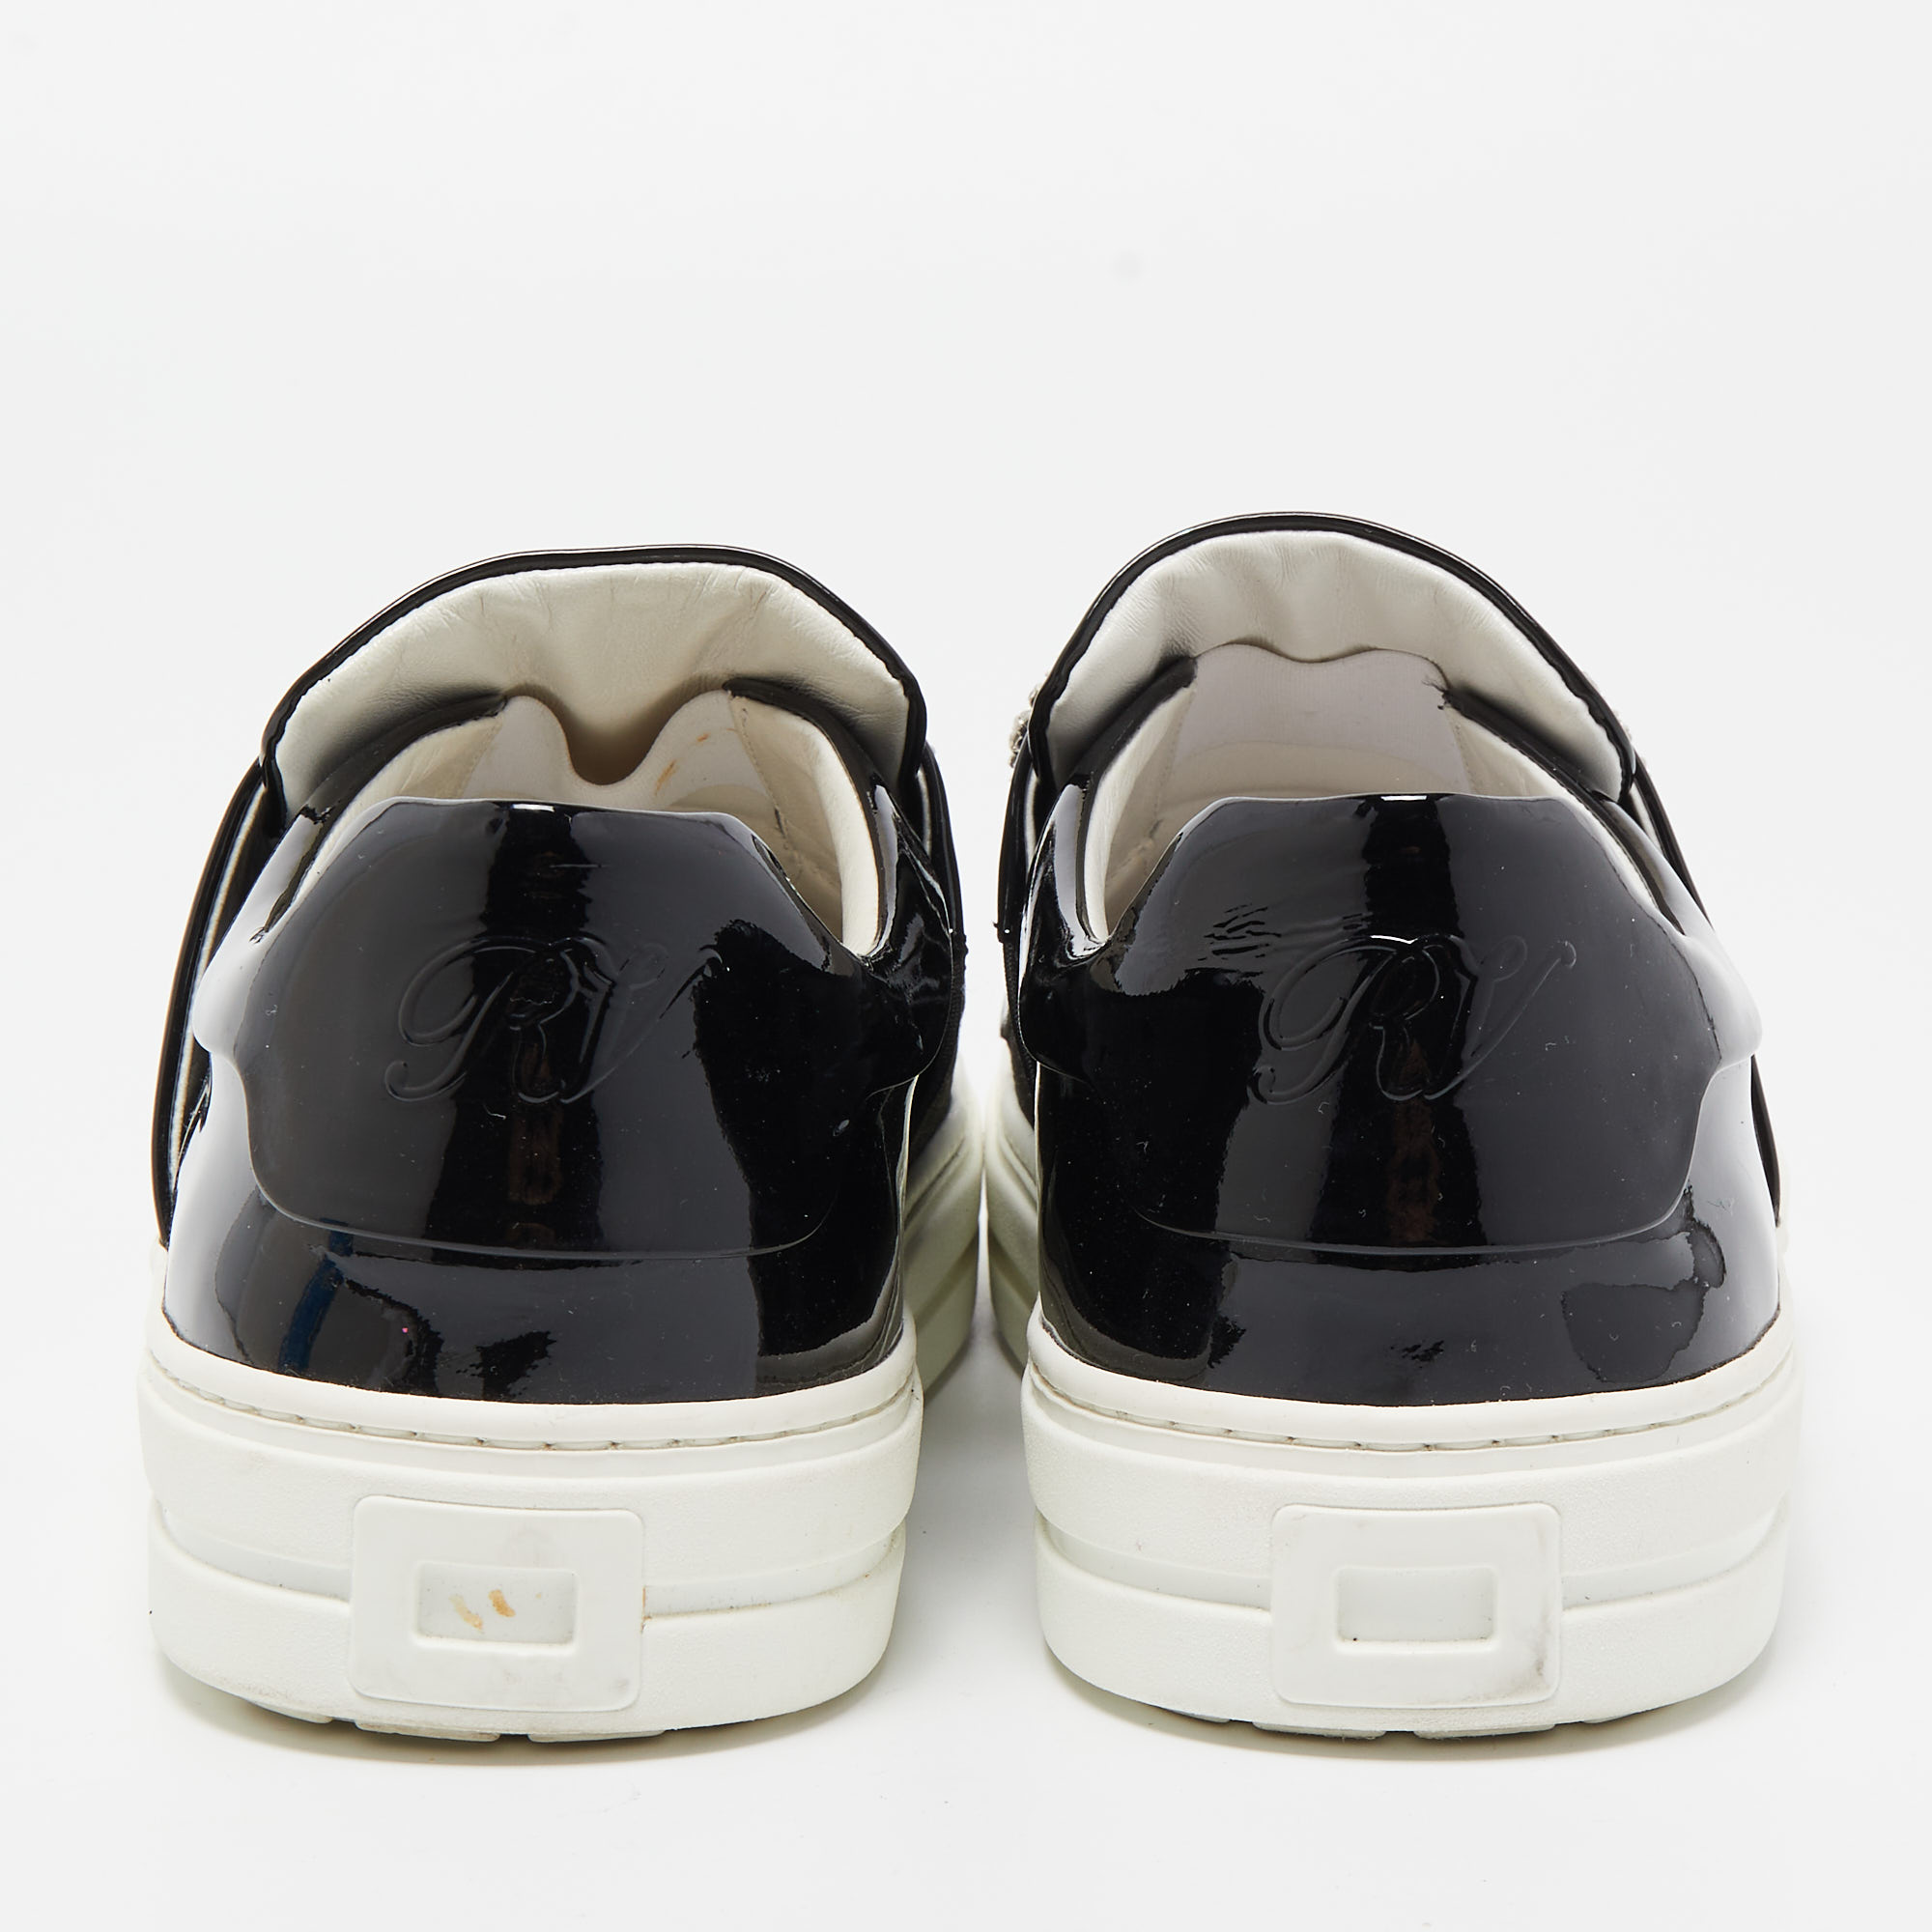 Roger Vivier Black Patent Leather Sneaky Viv Crystal Embellished Slip On Sneakers Size 38